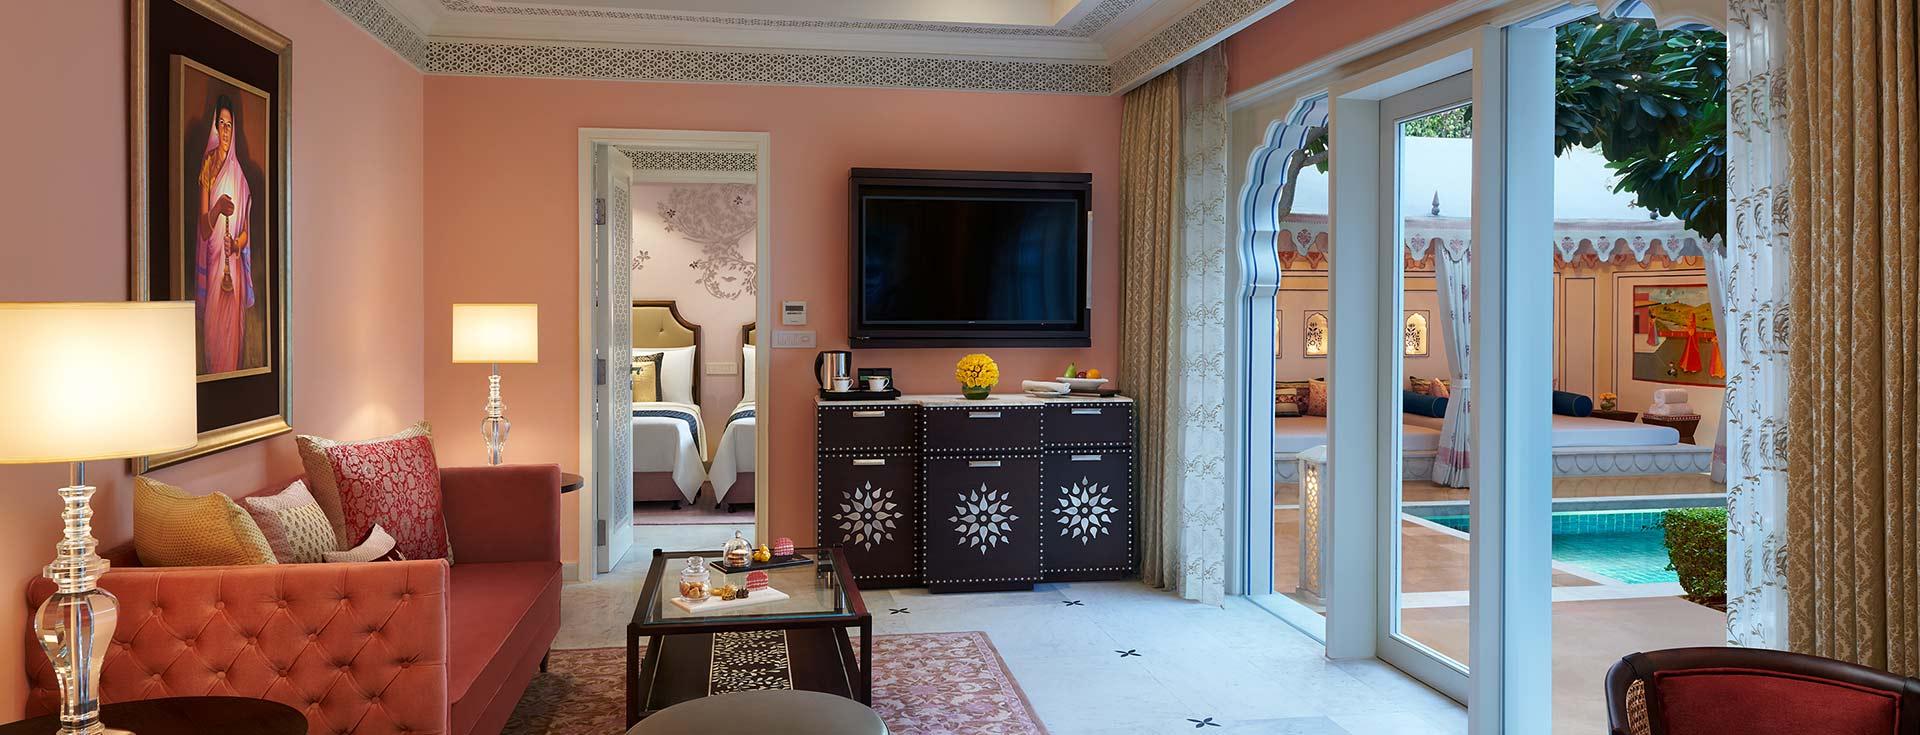 Royal Suite - The Leela Palace Jaipur